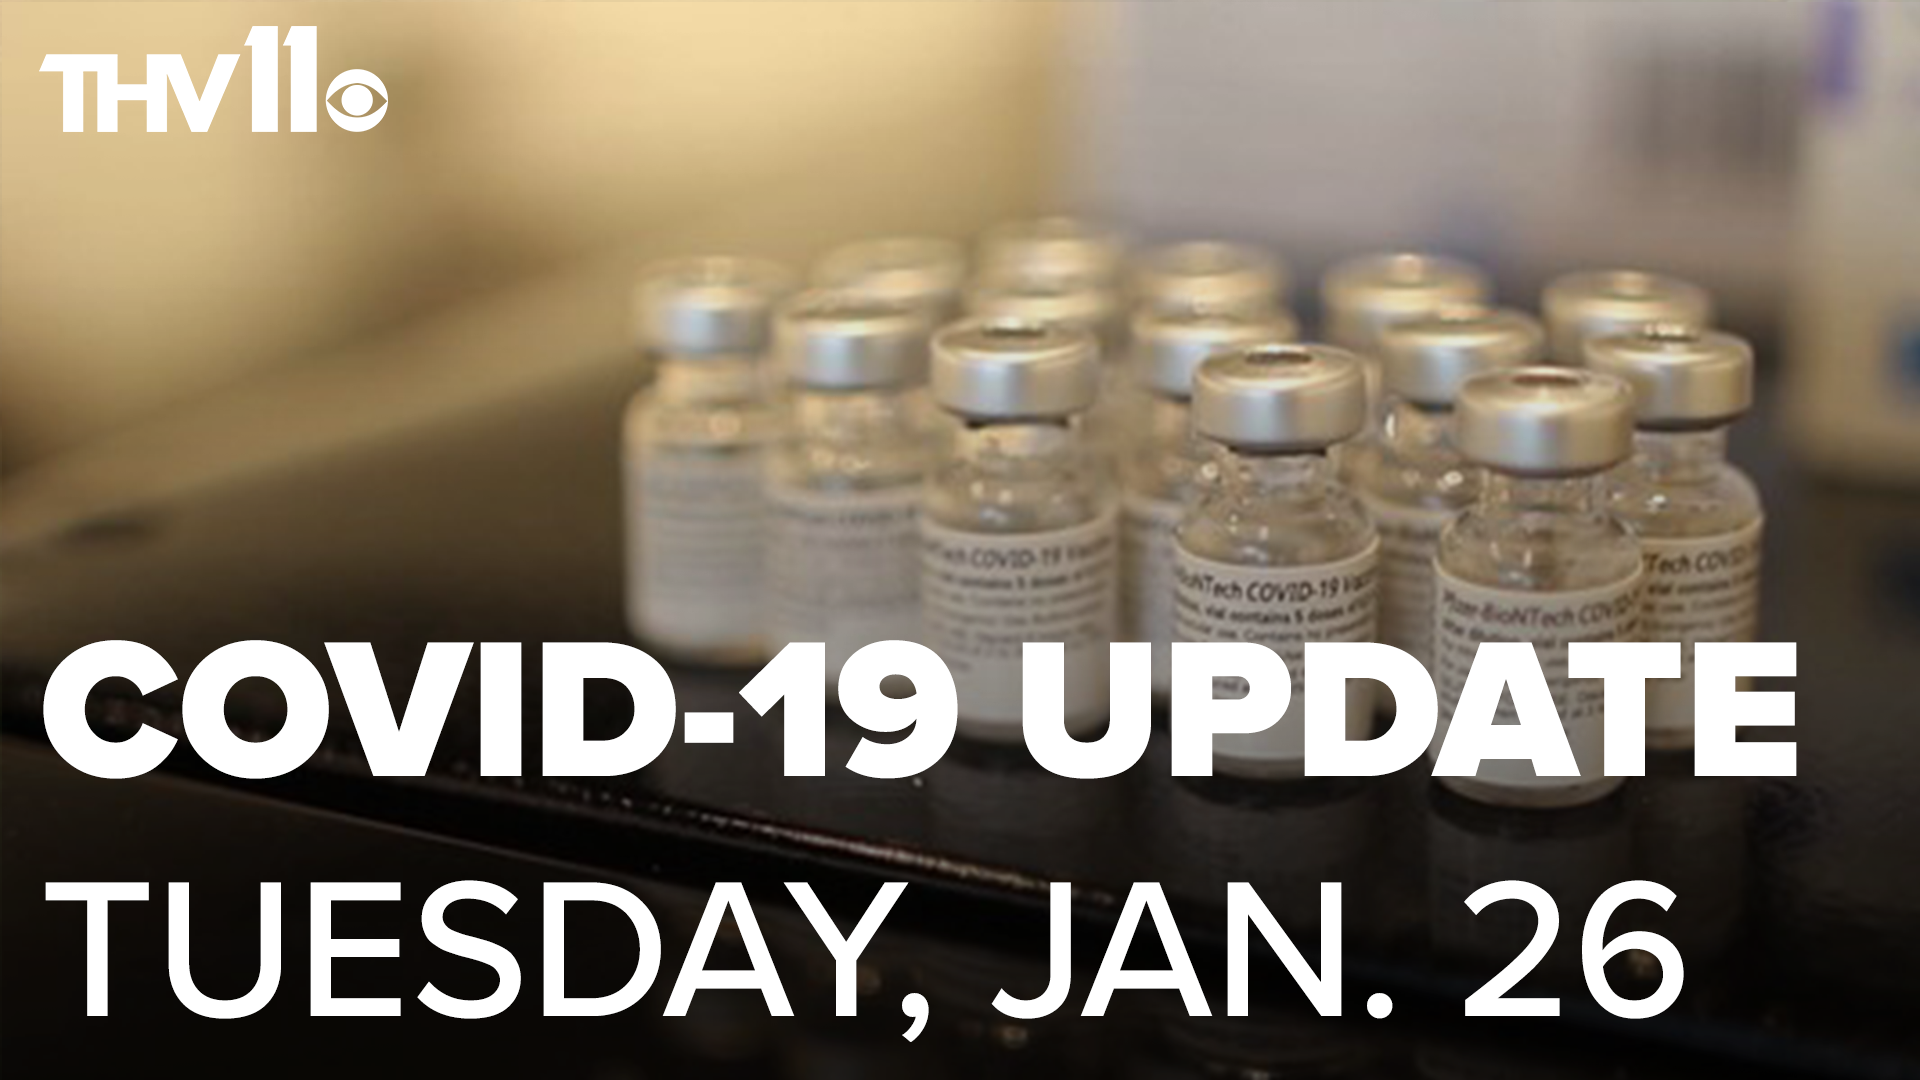 Craig O'Neill provides an update on the coronavirus in Arkansas for Tuesday, January 26.